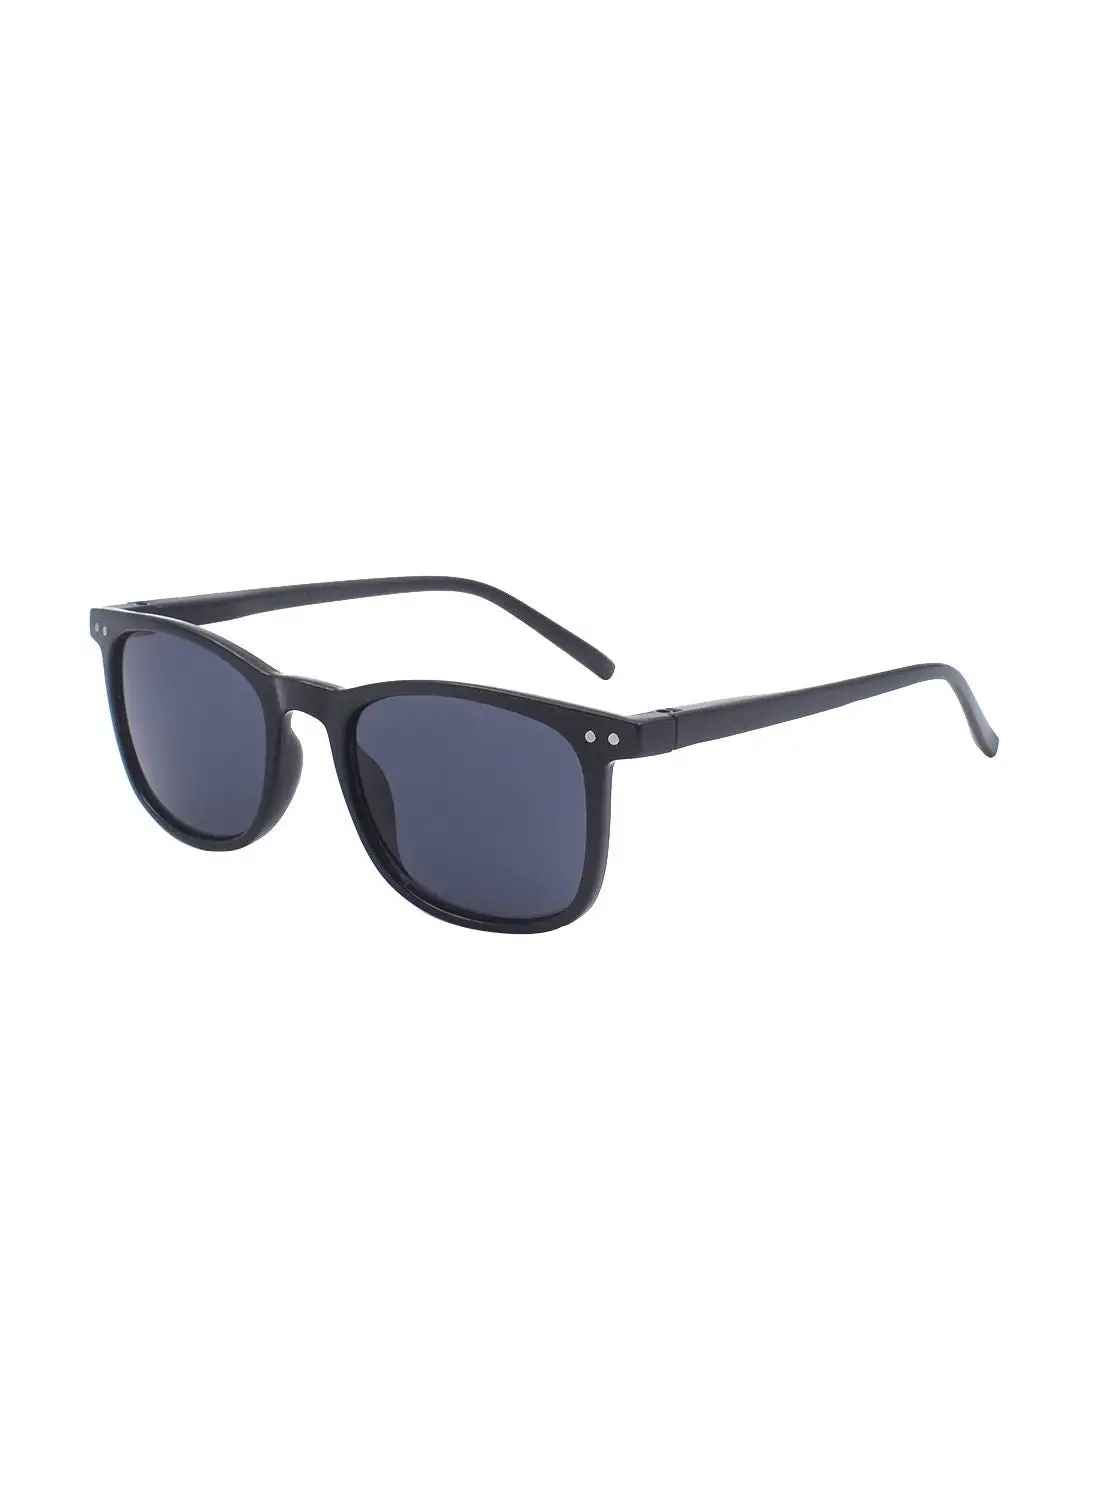 MADEYES Rectangular Sunglasses EE9S359-1